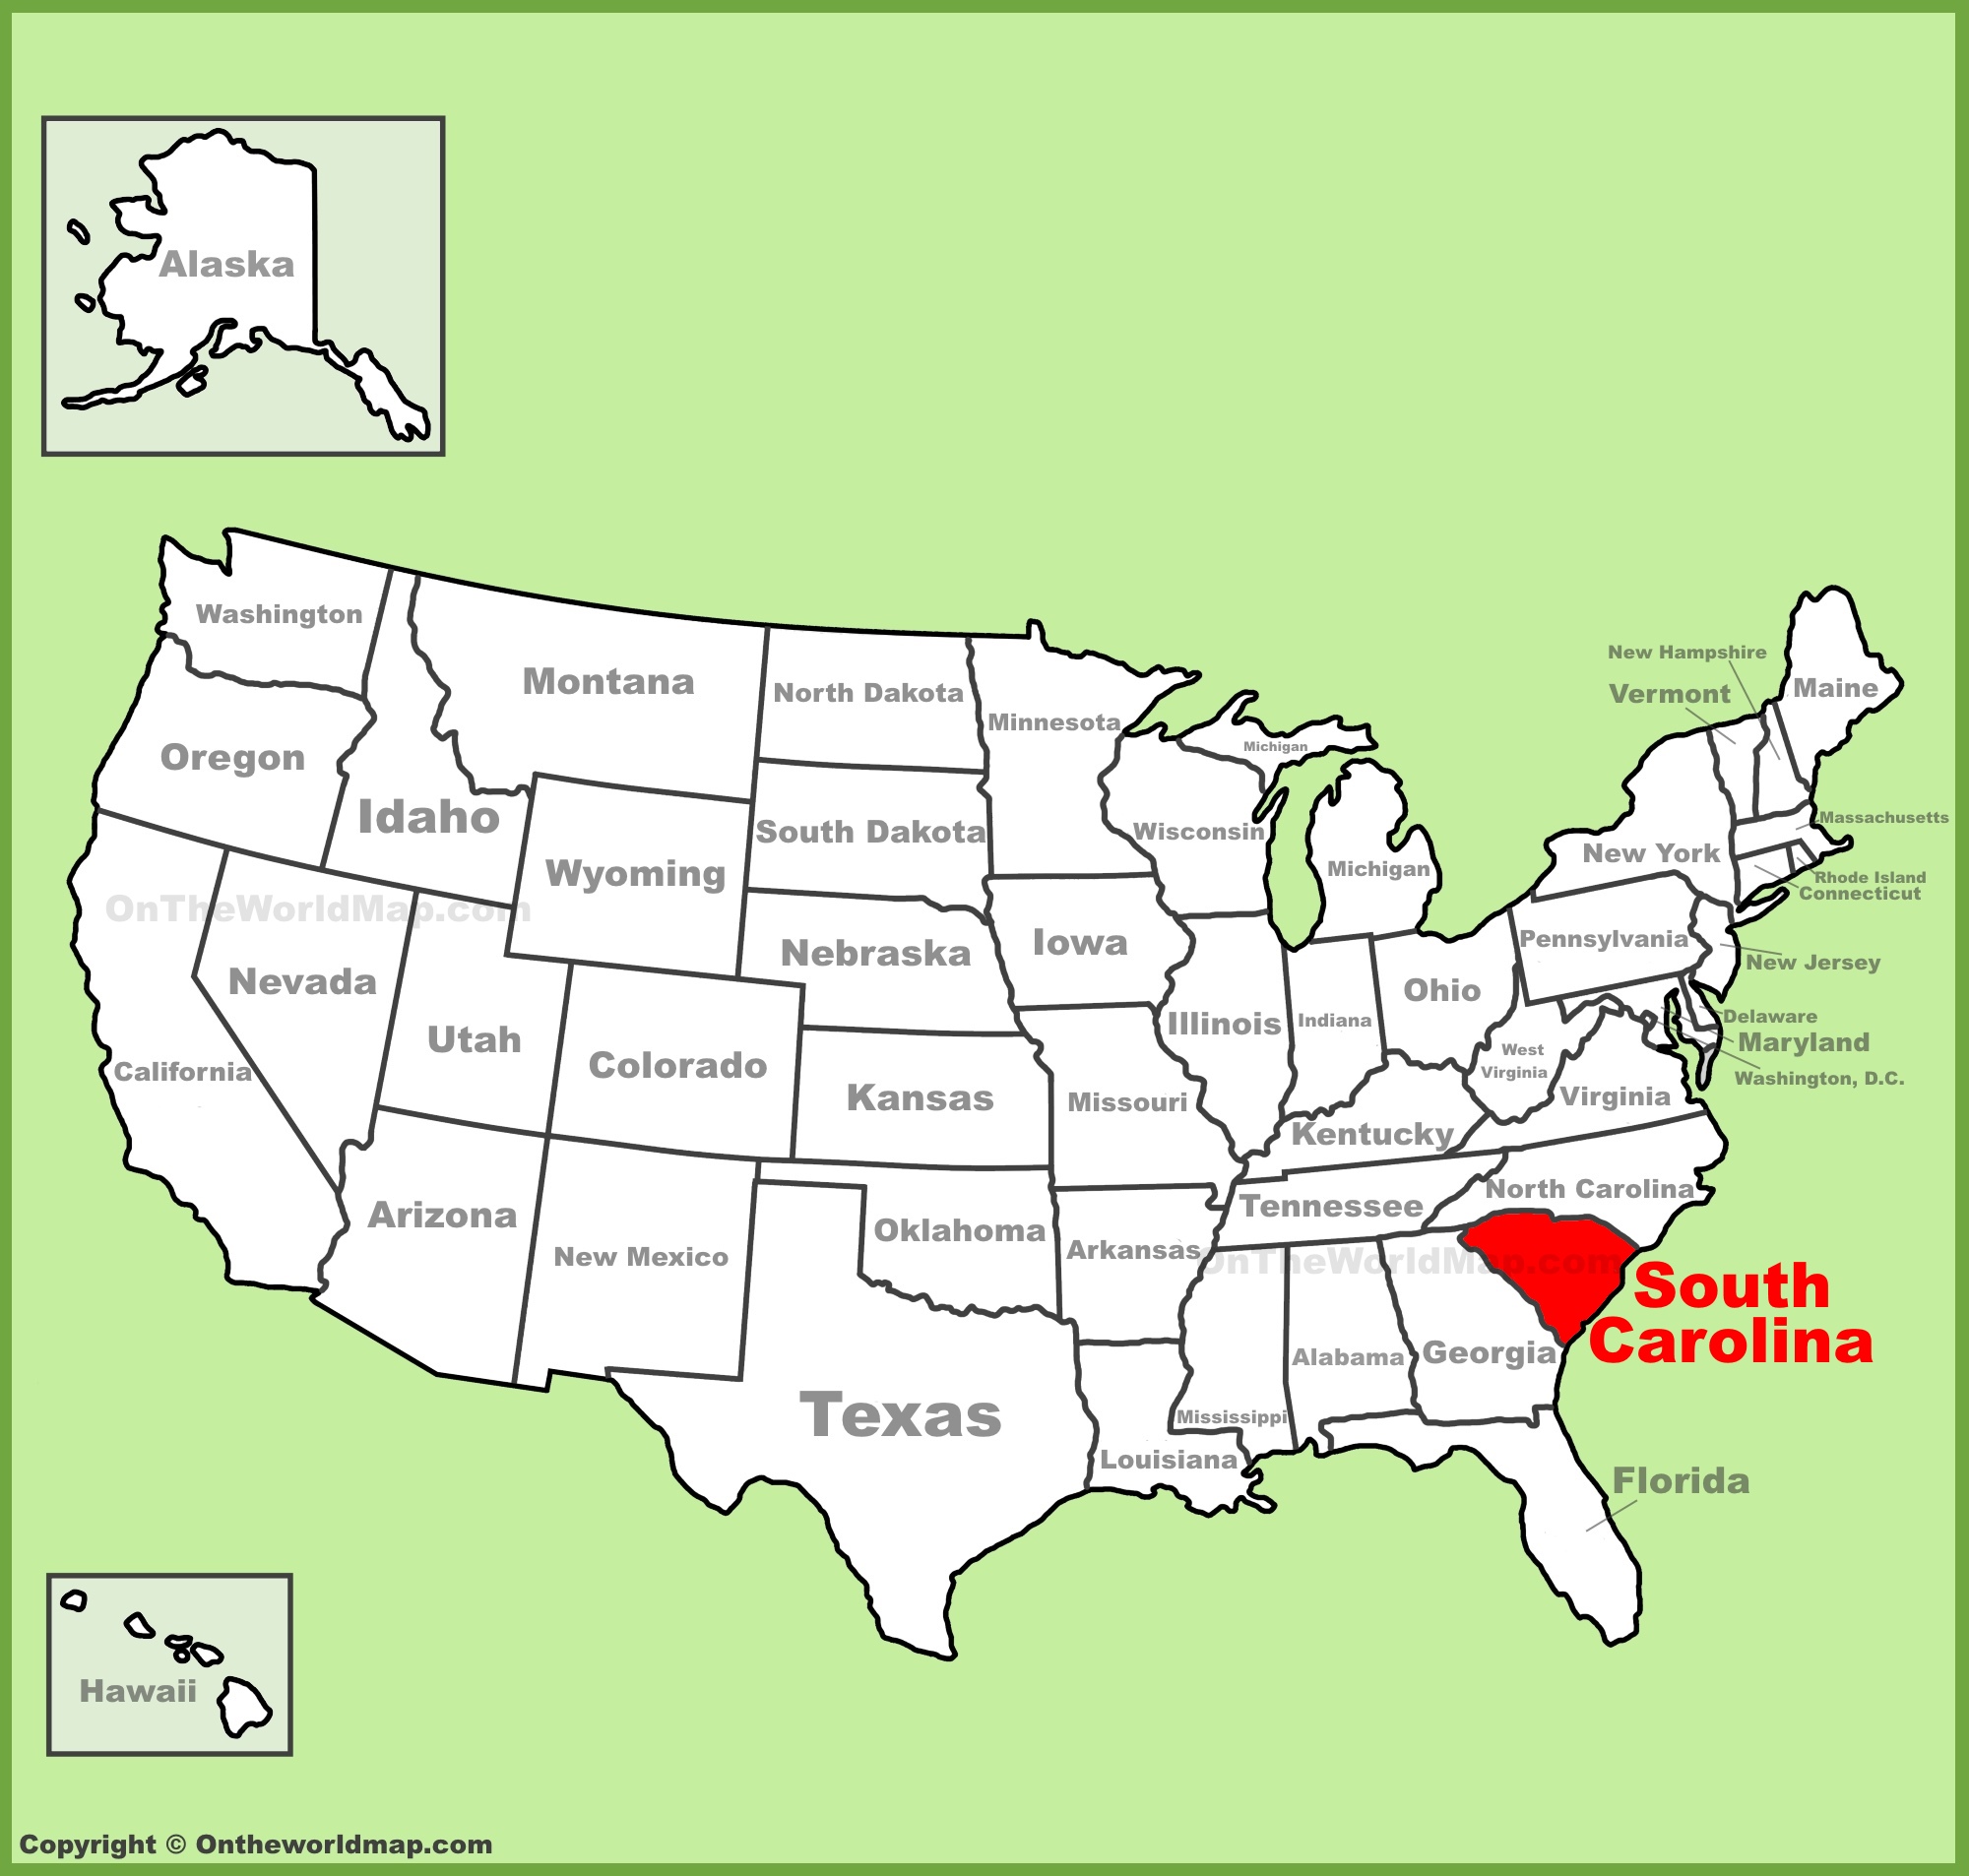 South Carolina Location On The Us Map